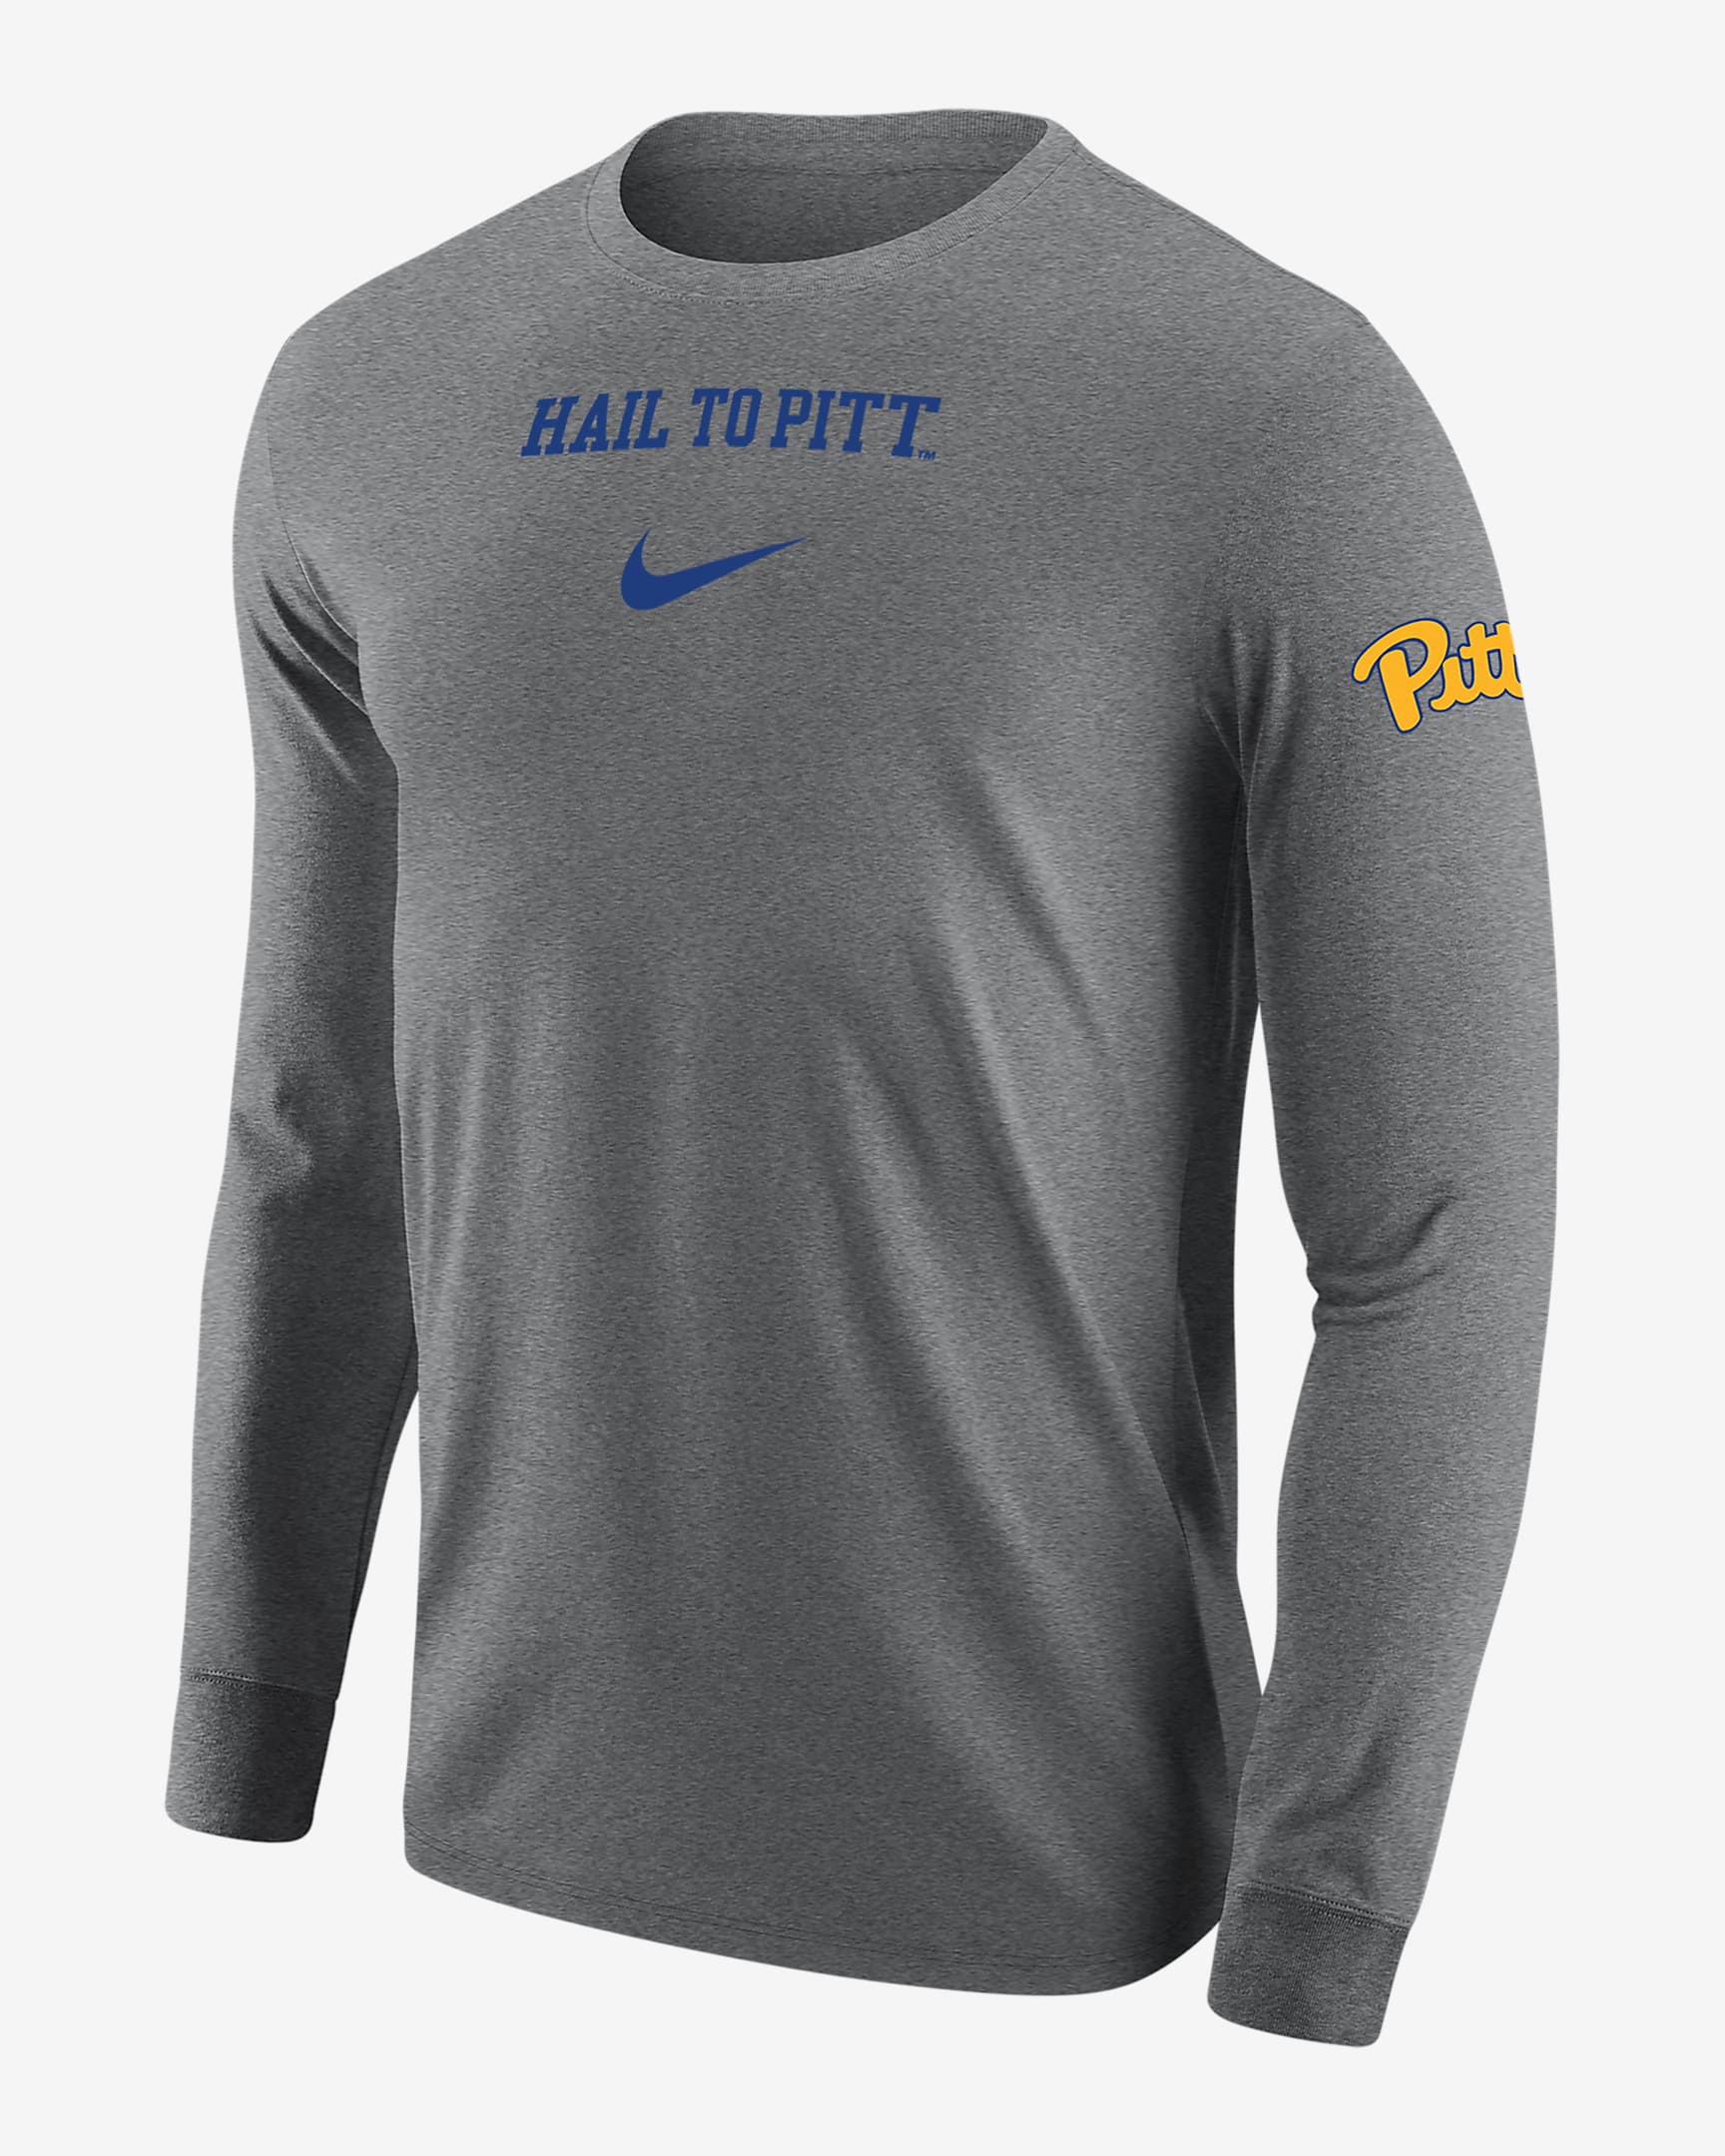 Pitt Men's Nike College Long-Sleeve T-Shirt. Nike.com